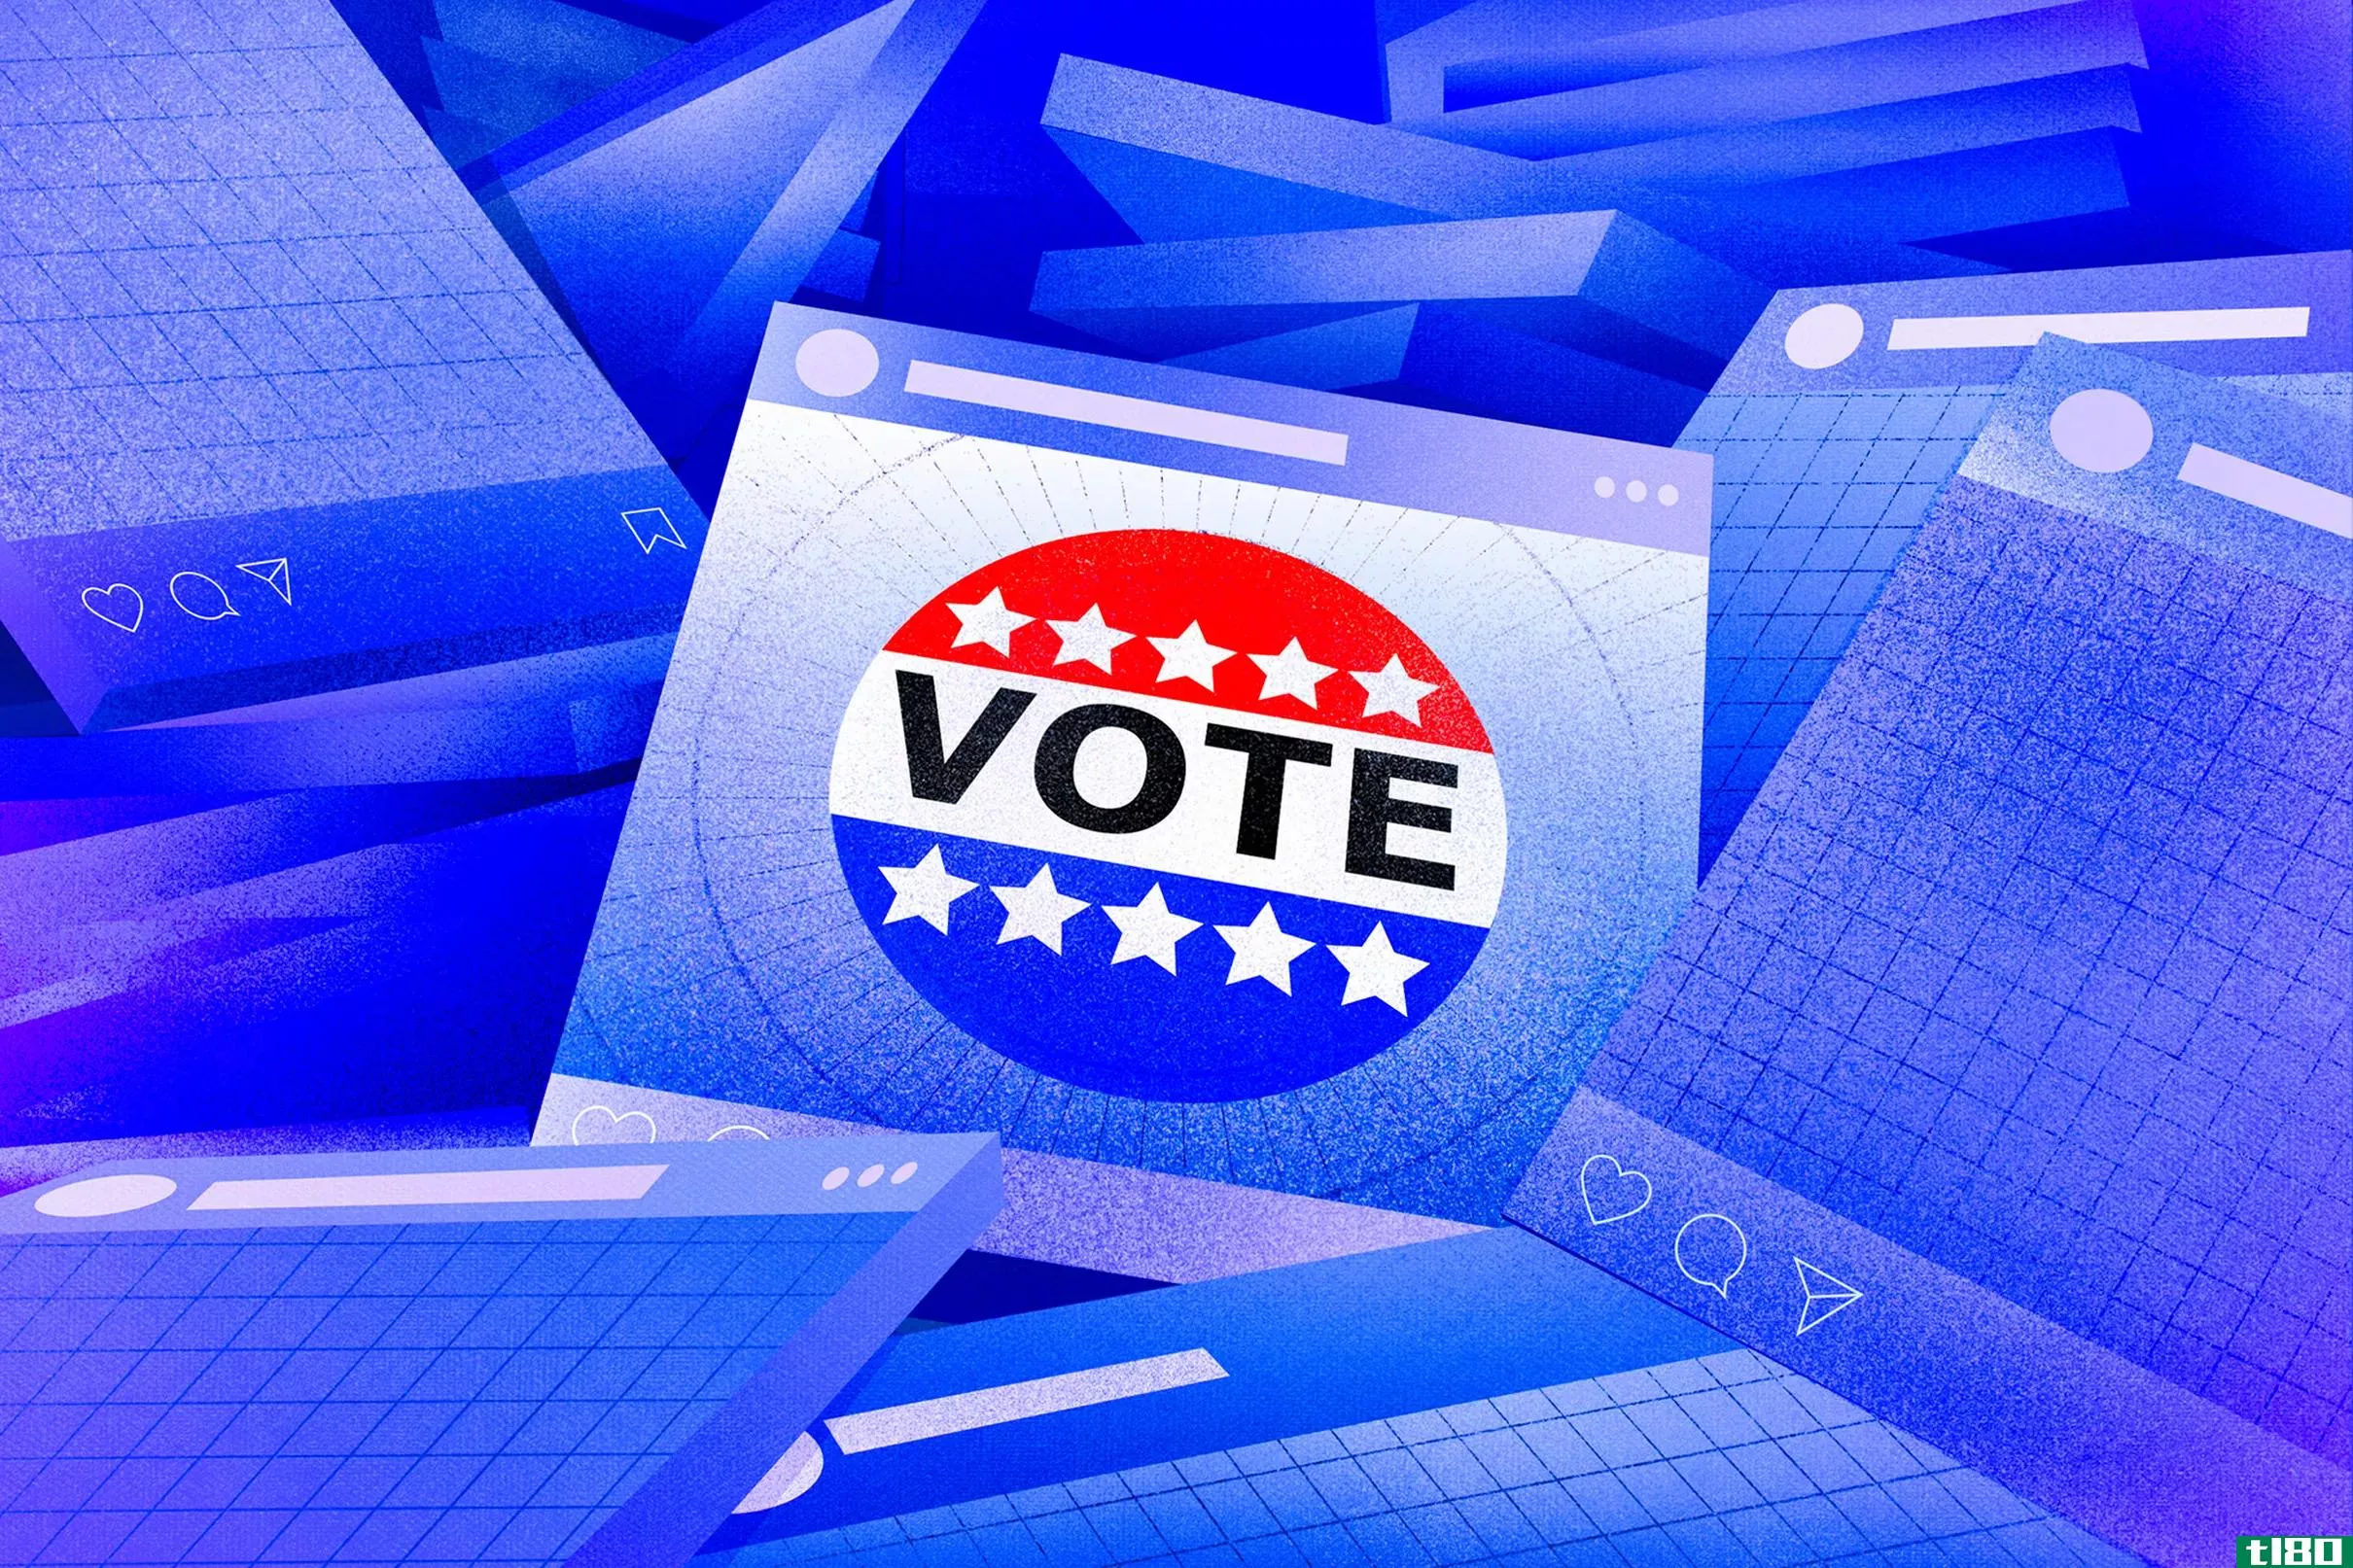 votebymail使得在选举前要求邮寄选票变得更容易